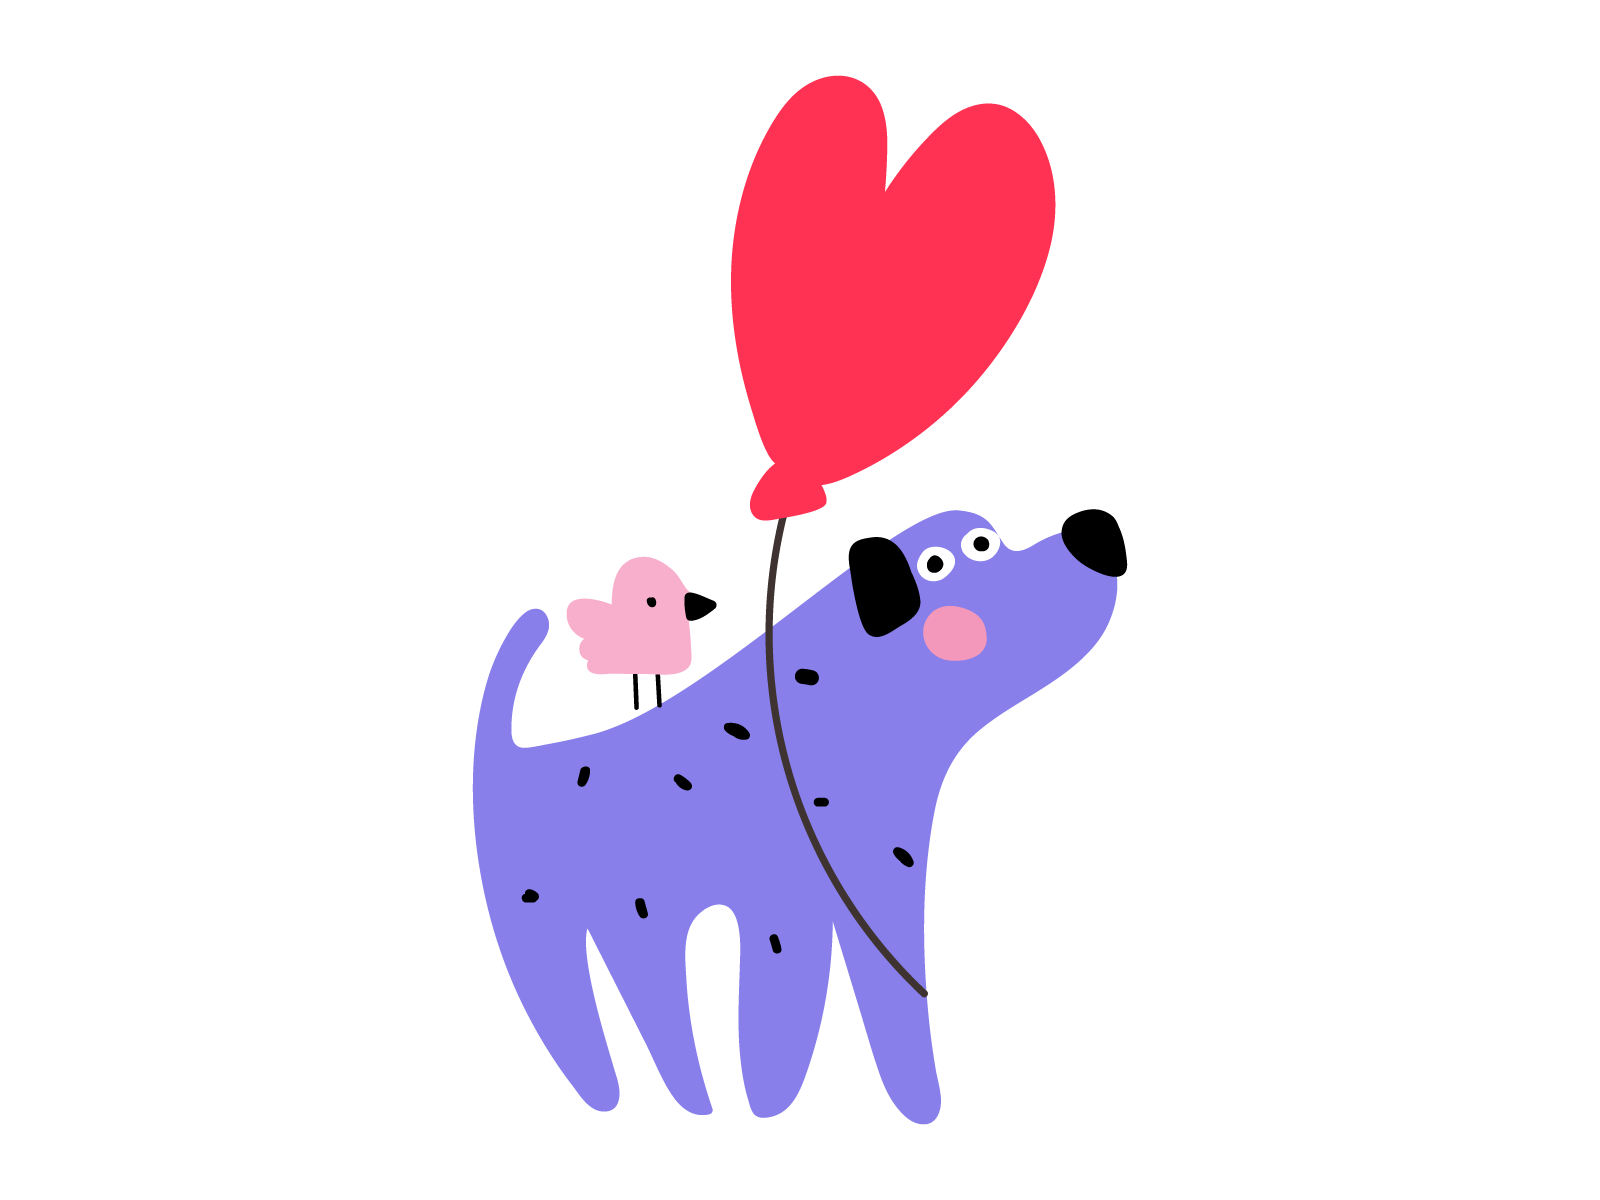 Dog bird balloon